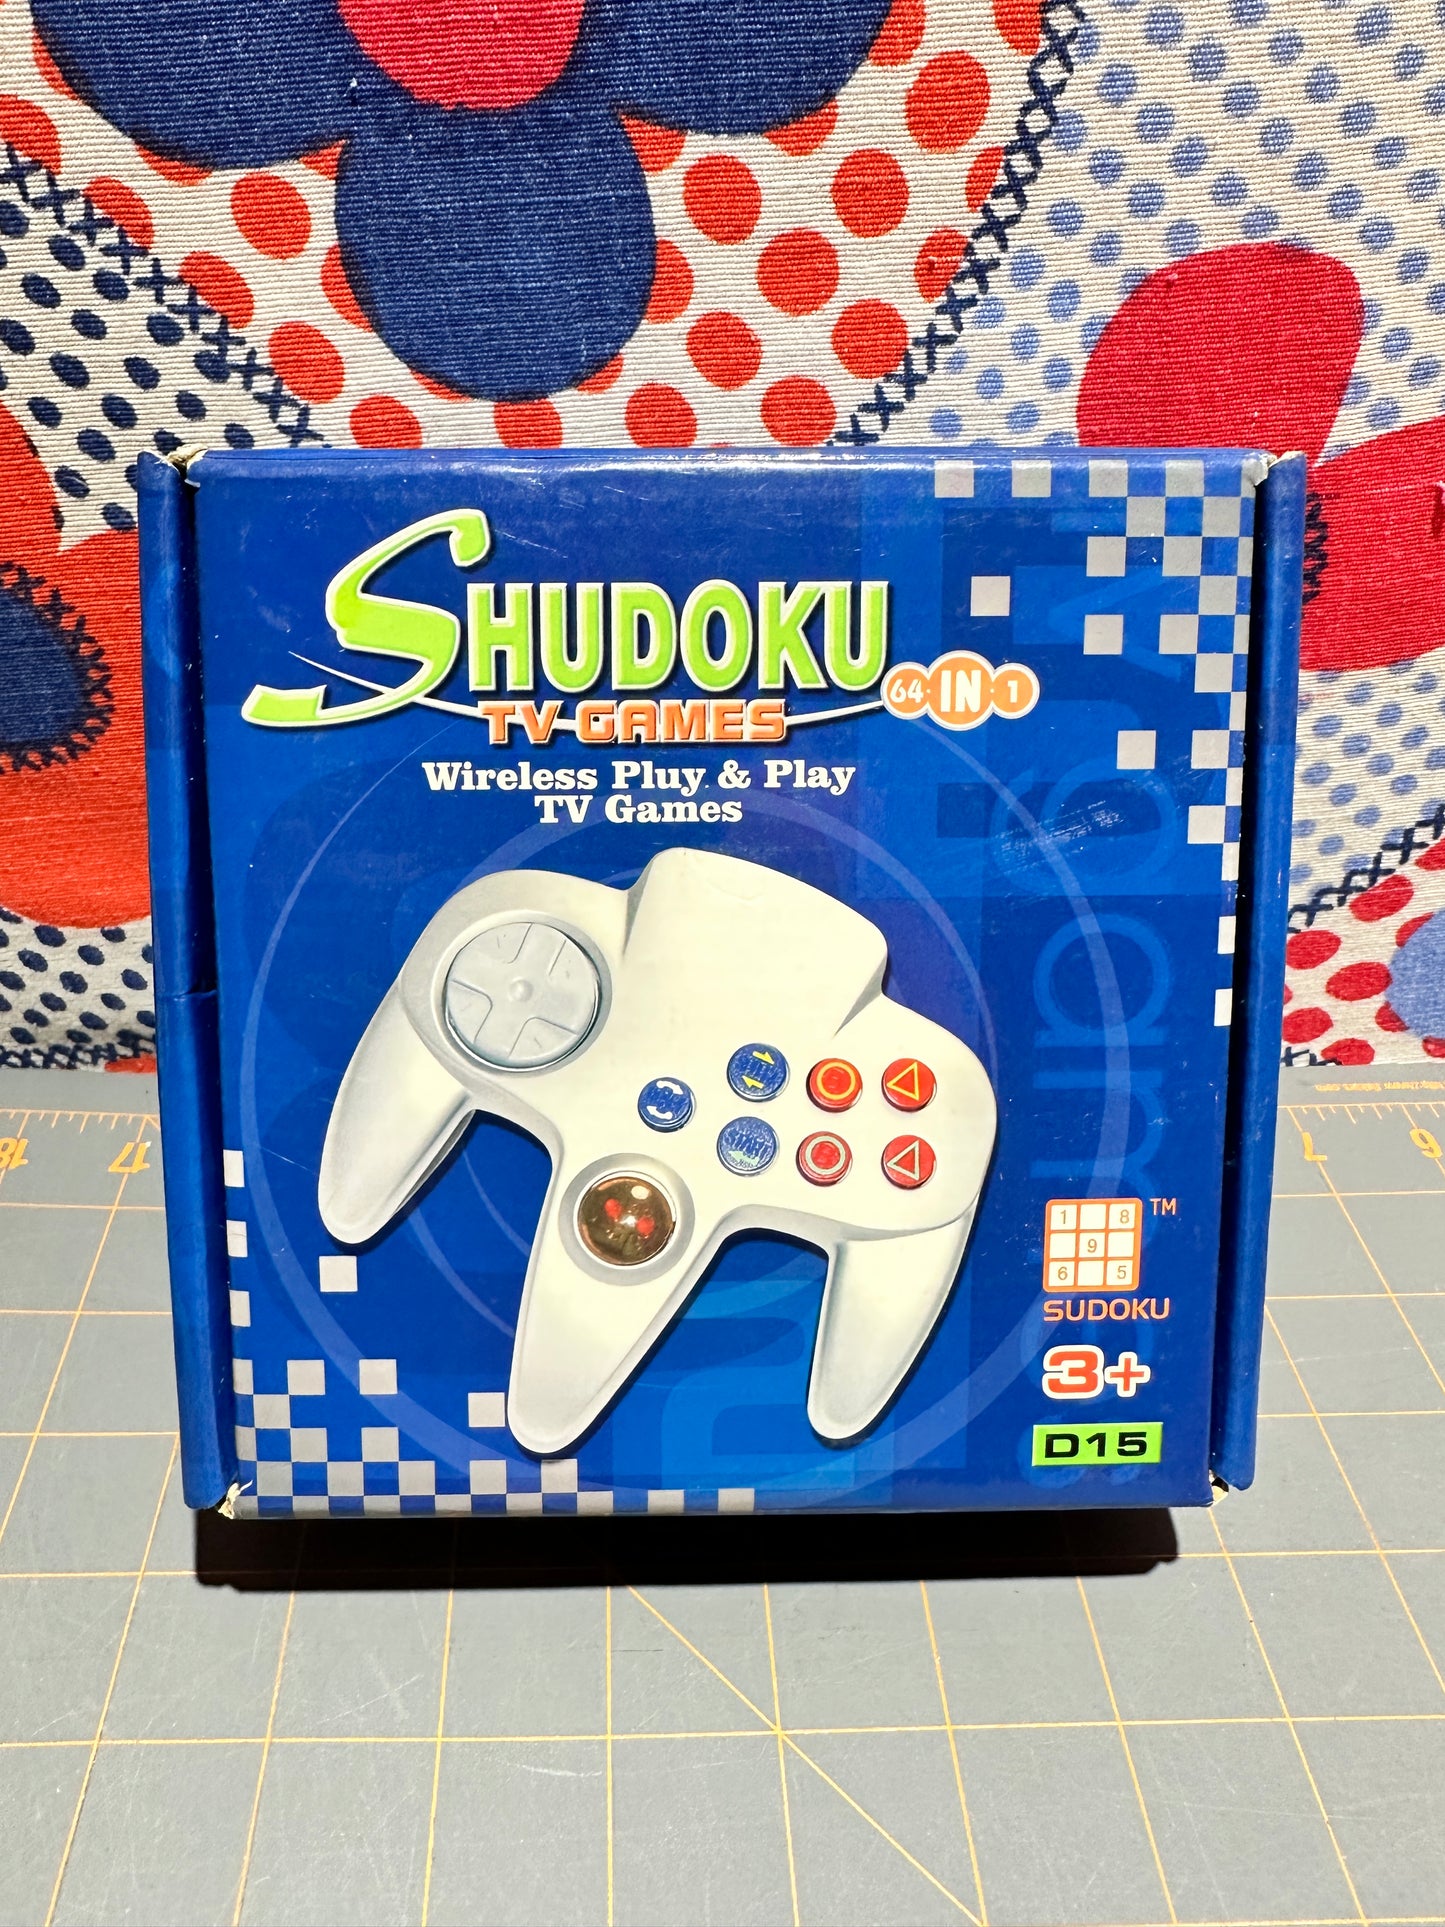 Shudoku TV Games, 64 In 1, Wireless Games